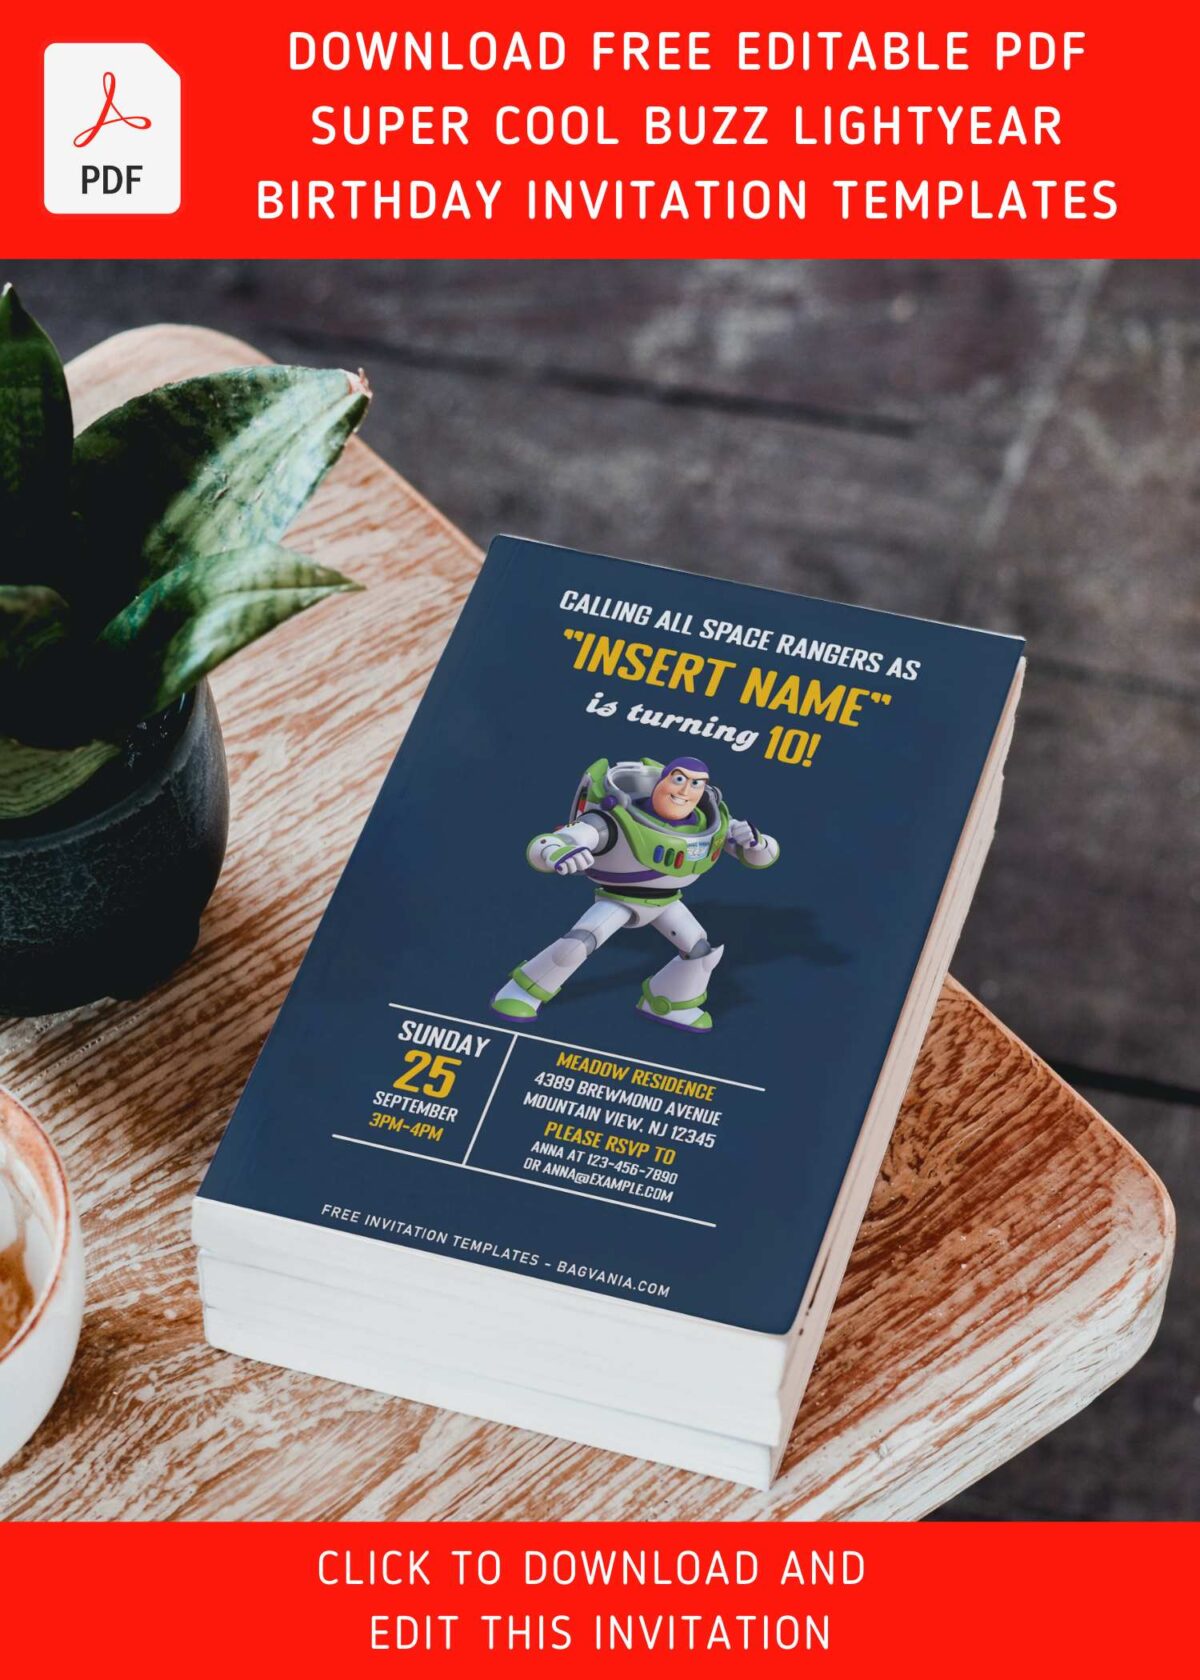 (Free Editable PDF) Simple Space Ranger Buzz Lightyear Boy Birthday Invitation Templates with editable text